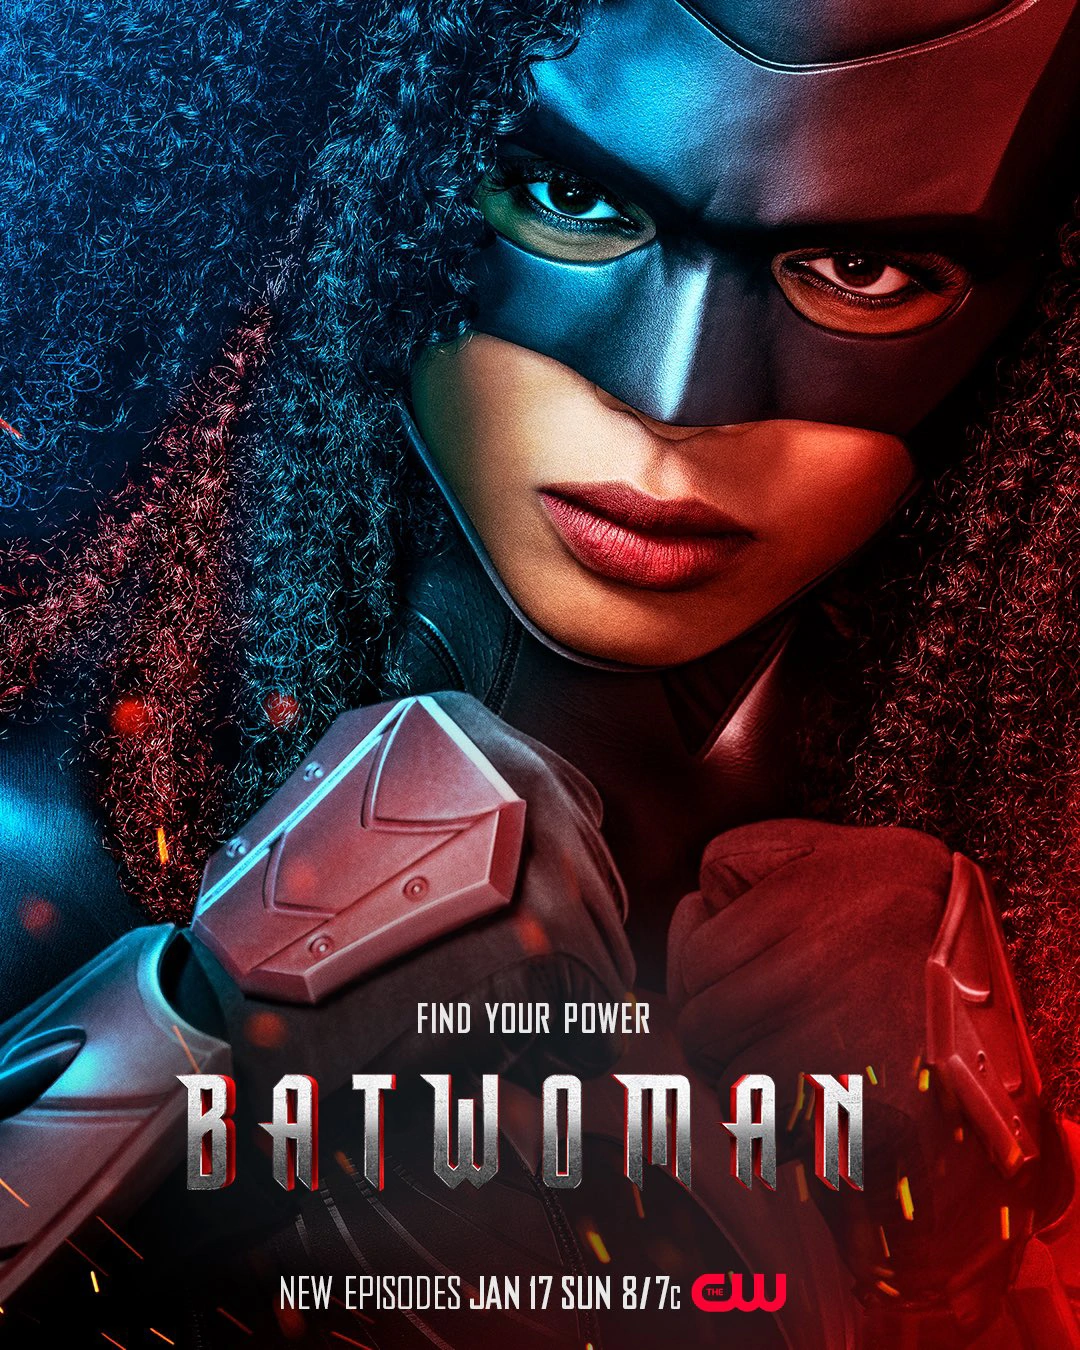 Stiahni si Seriál Batwoman S02E02 (CZ)[TvRip][1080p] = CSFD 38%